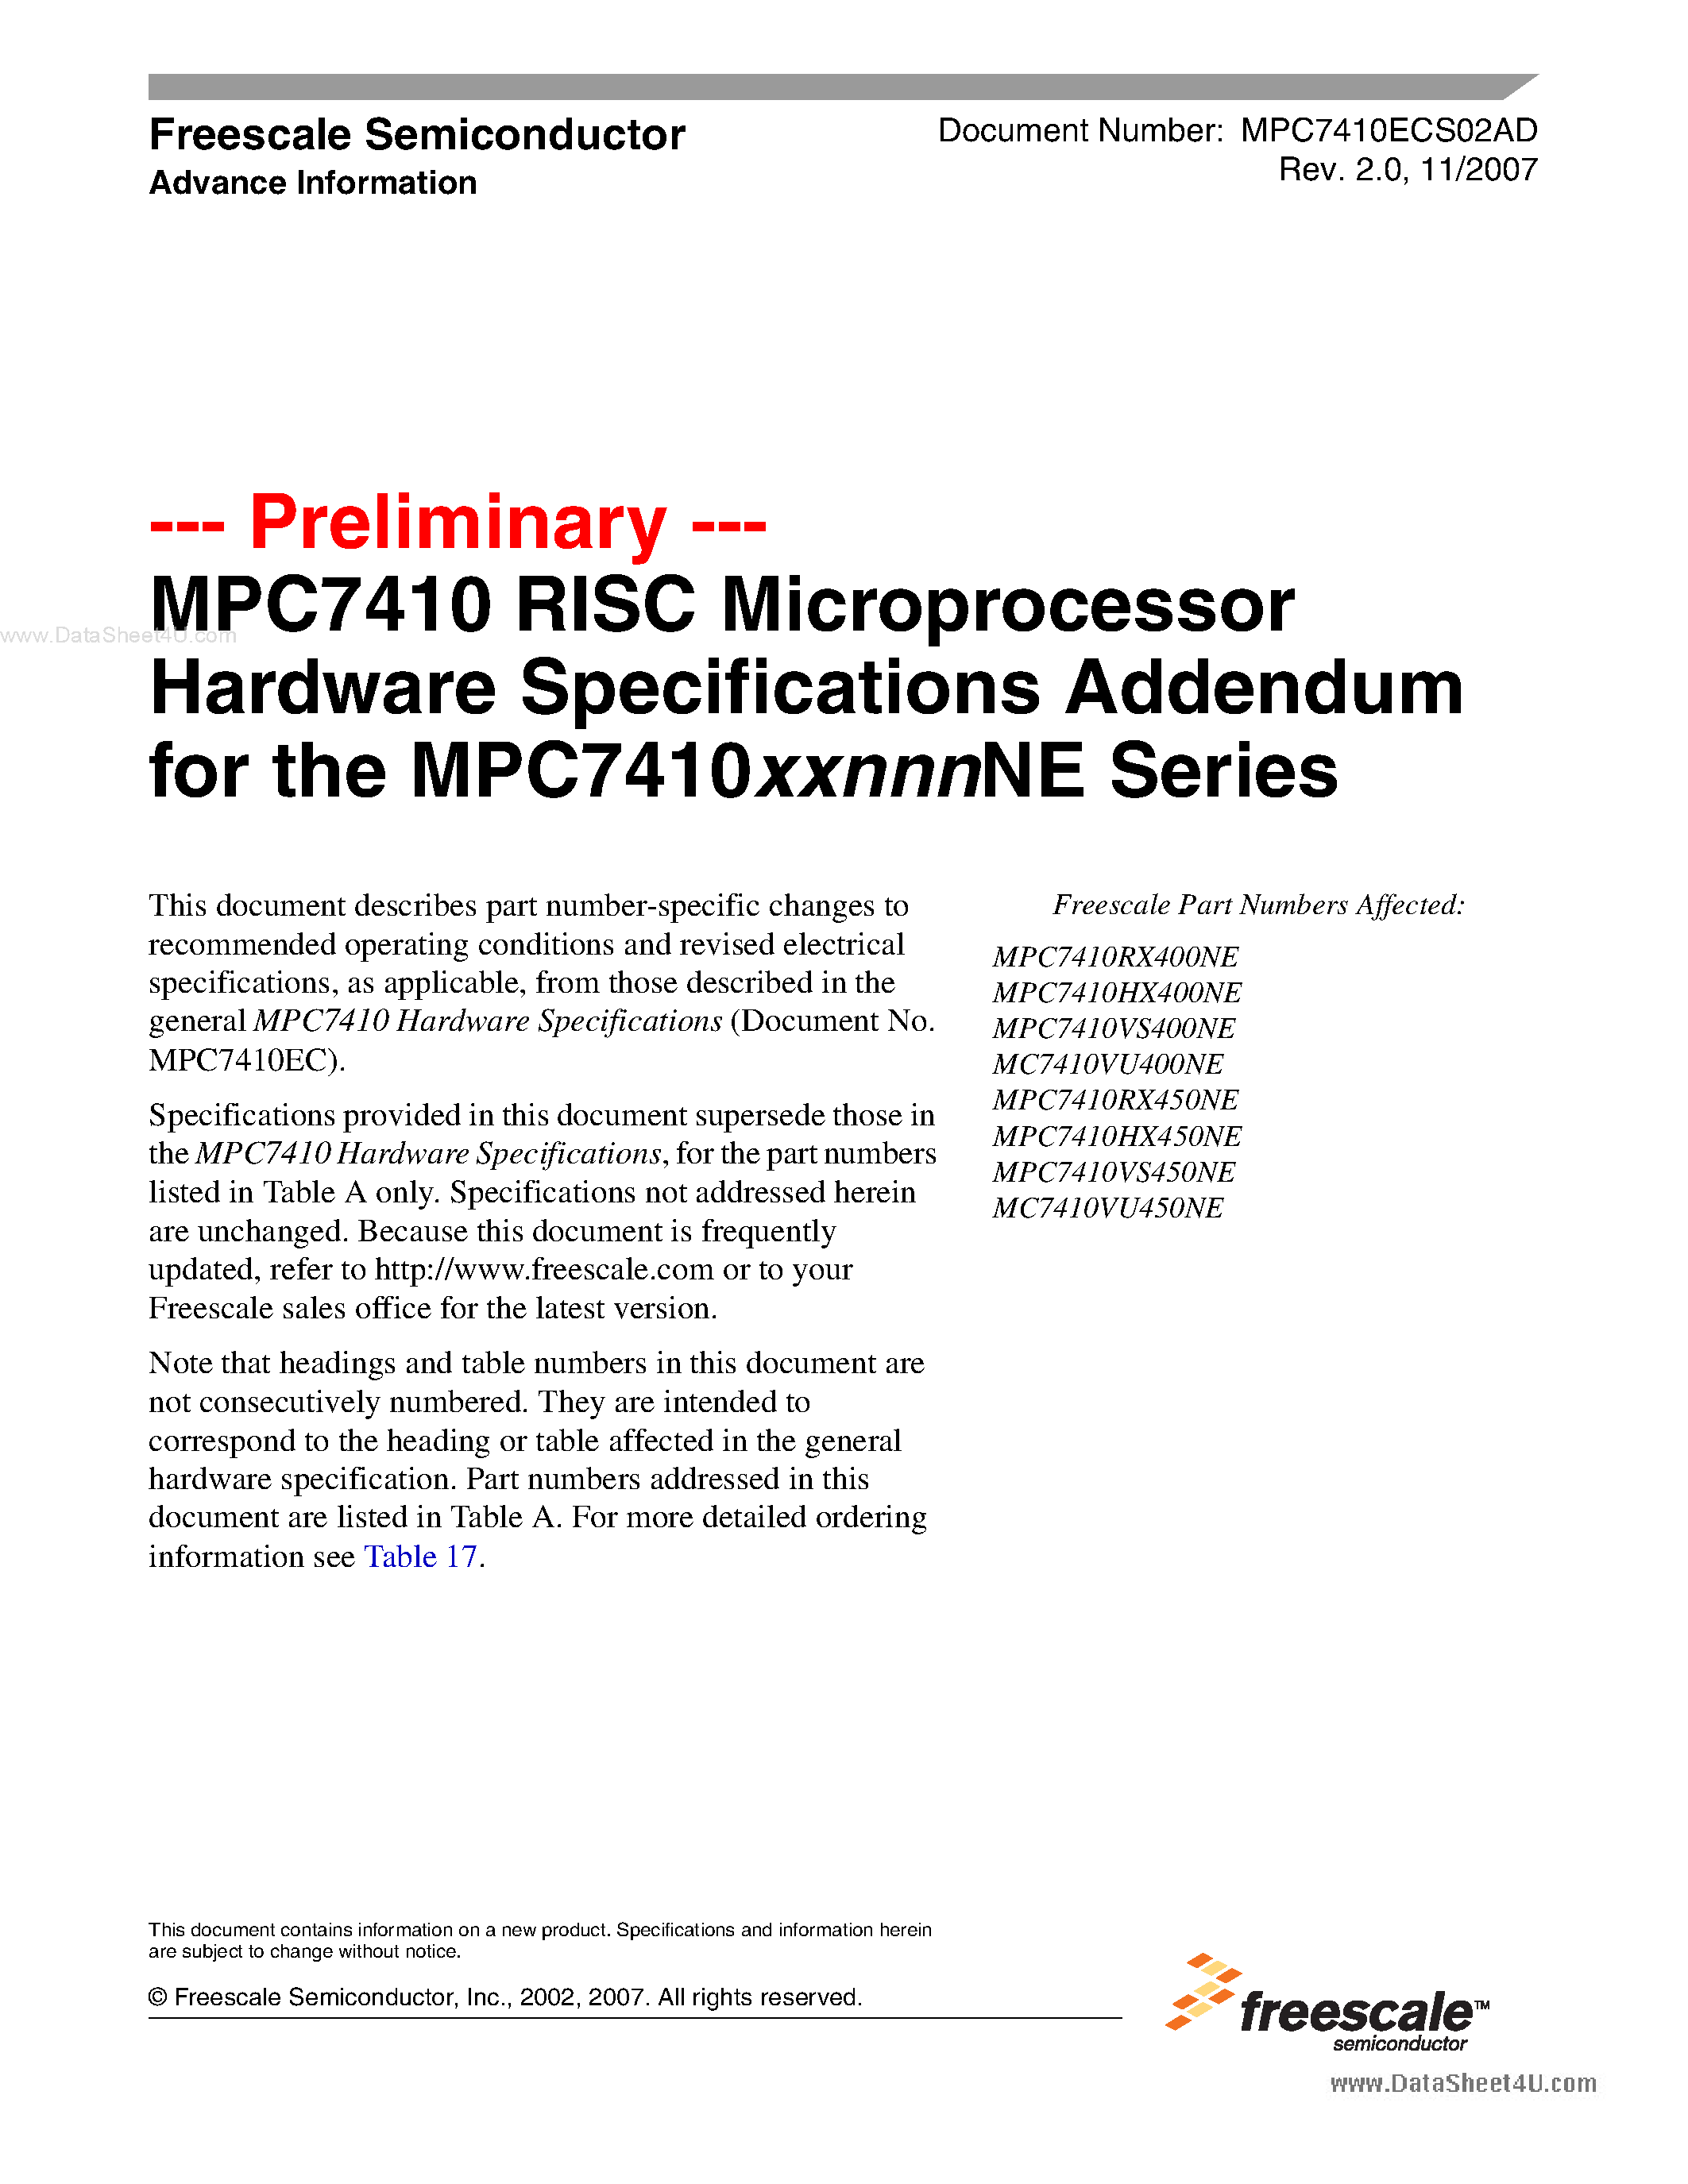 Даташит MC7410-RISC Microprocessor Hardware Specifications Addendum страница 1